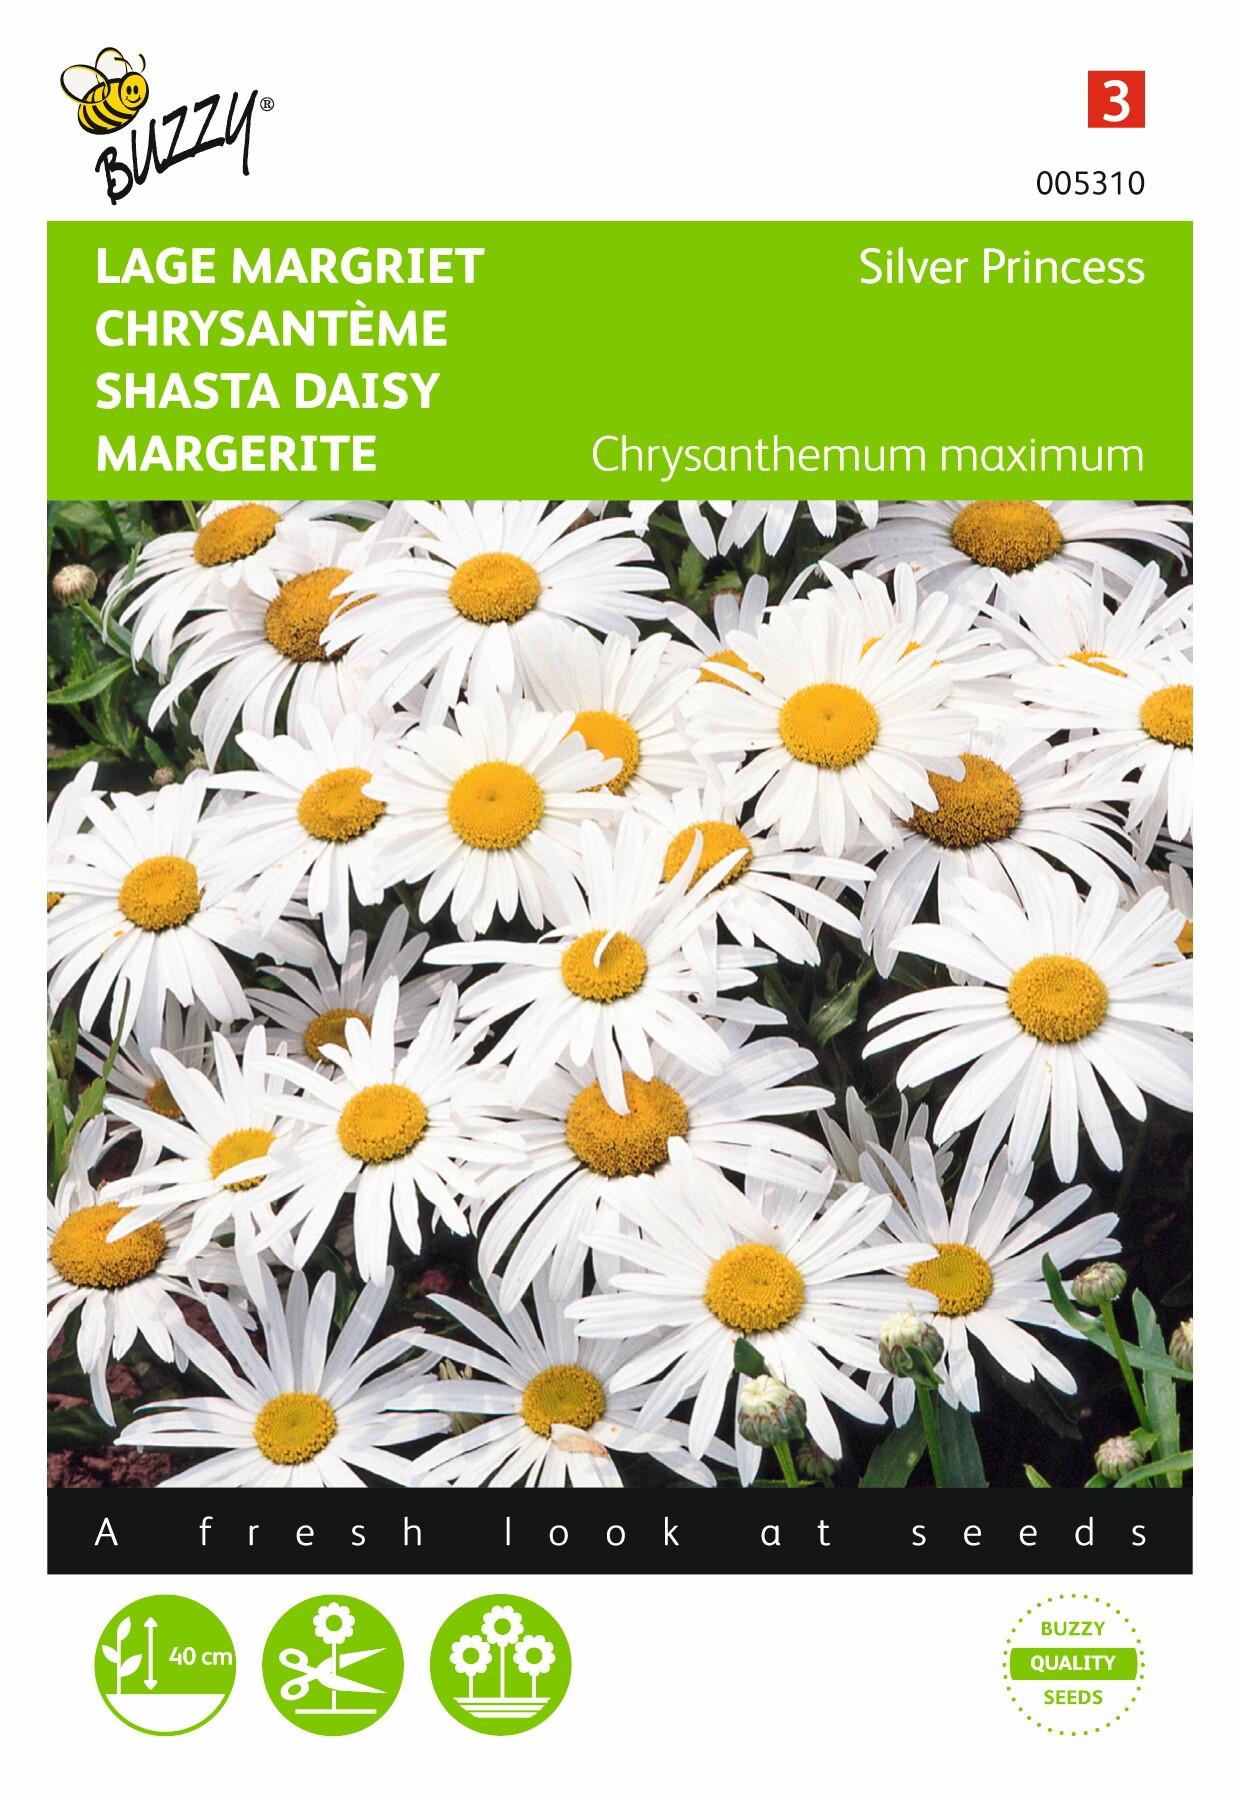 Chrysanthemum maximum nanum Silver Princess